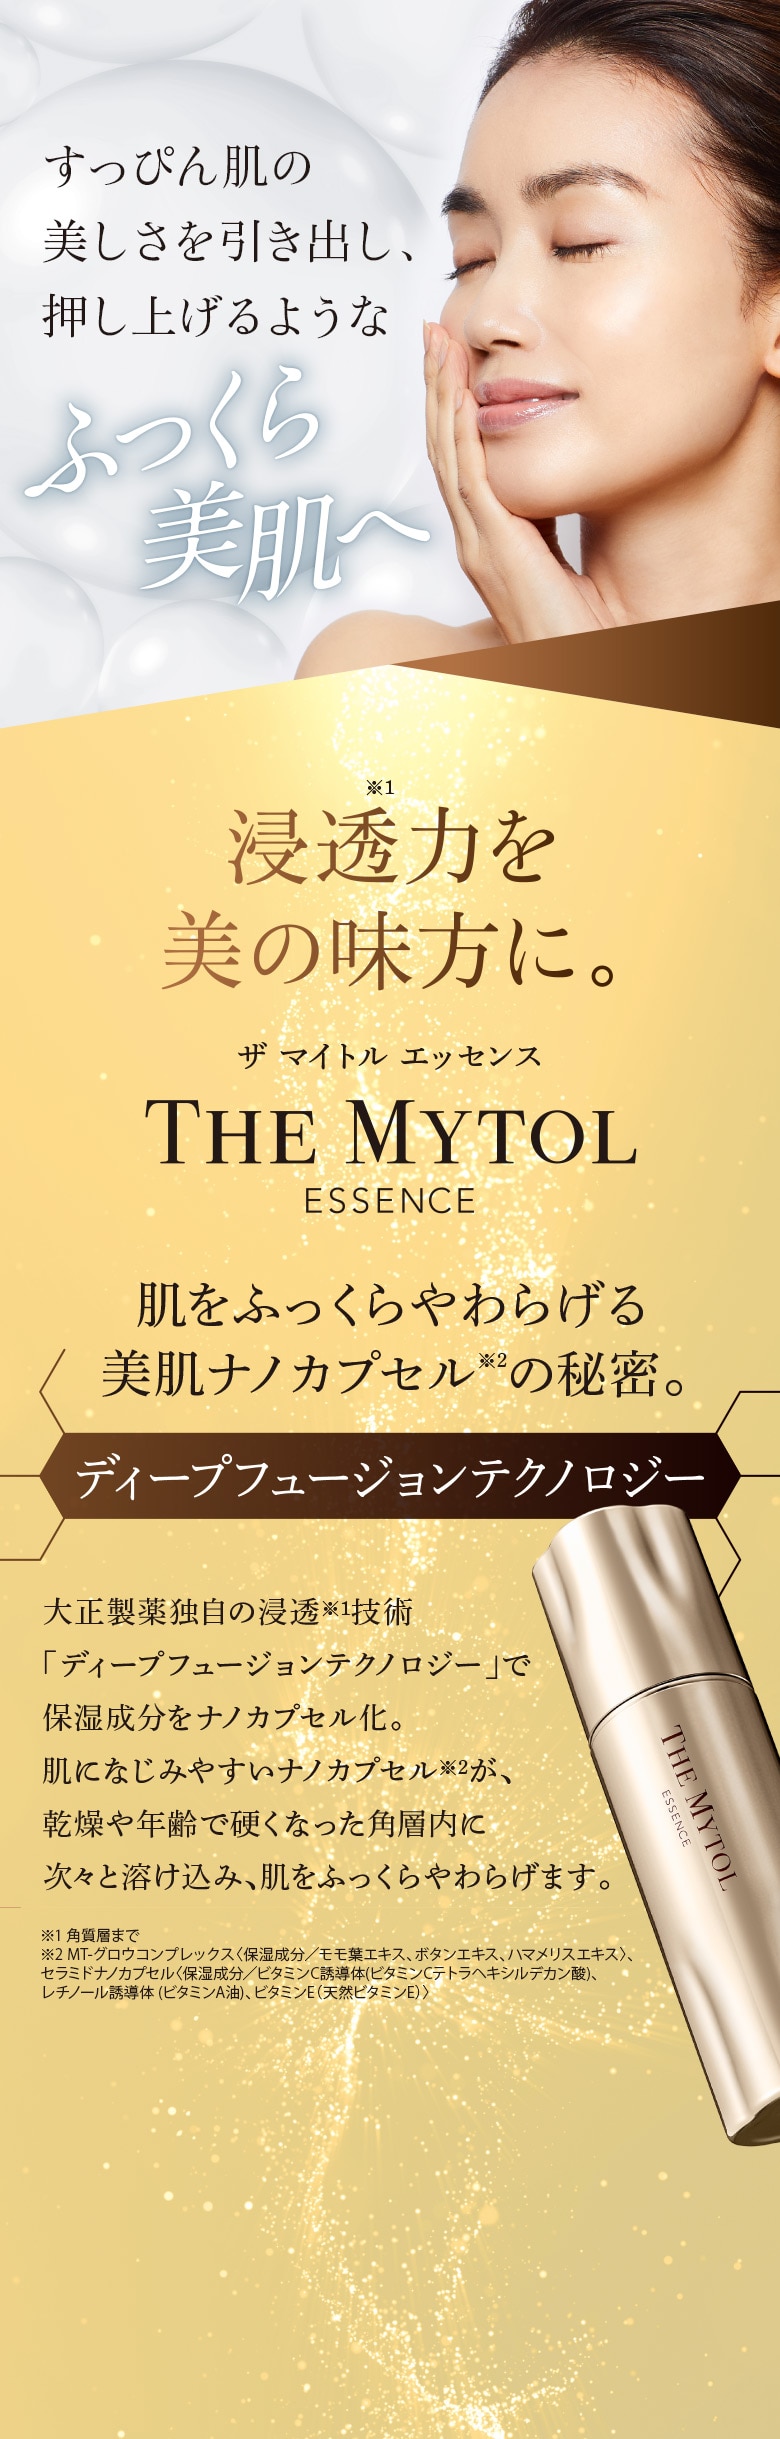 THE MYTOL ESSENCE - TAISHO BEAUTY ONLINE